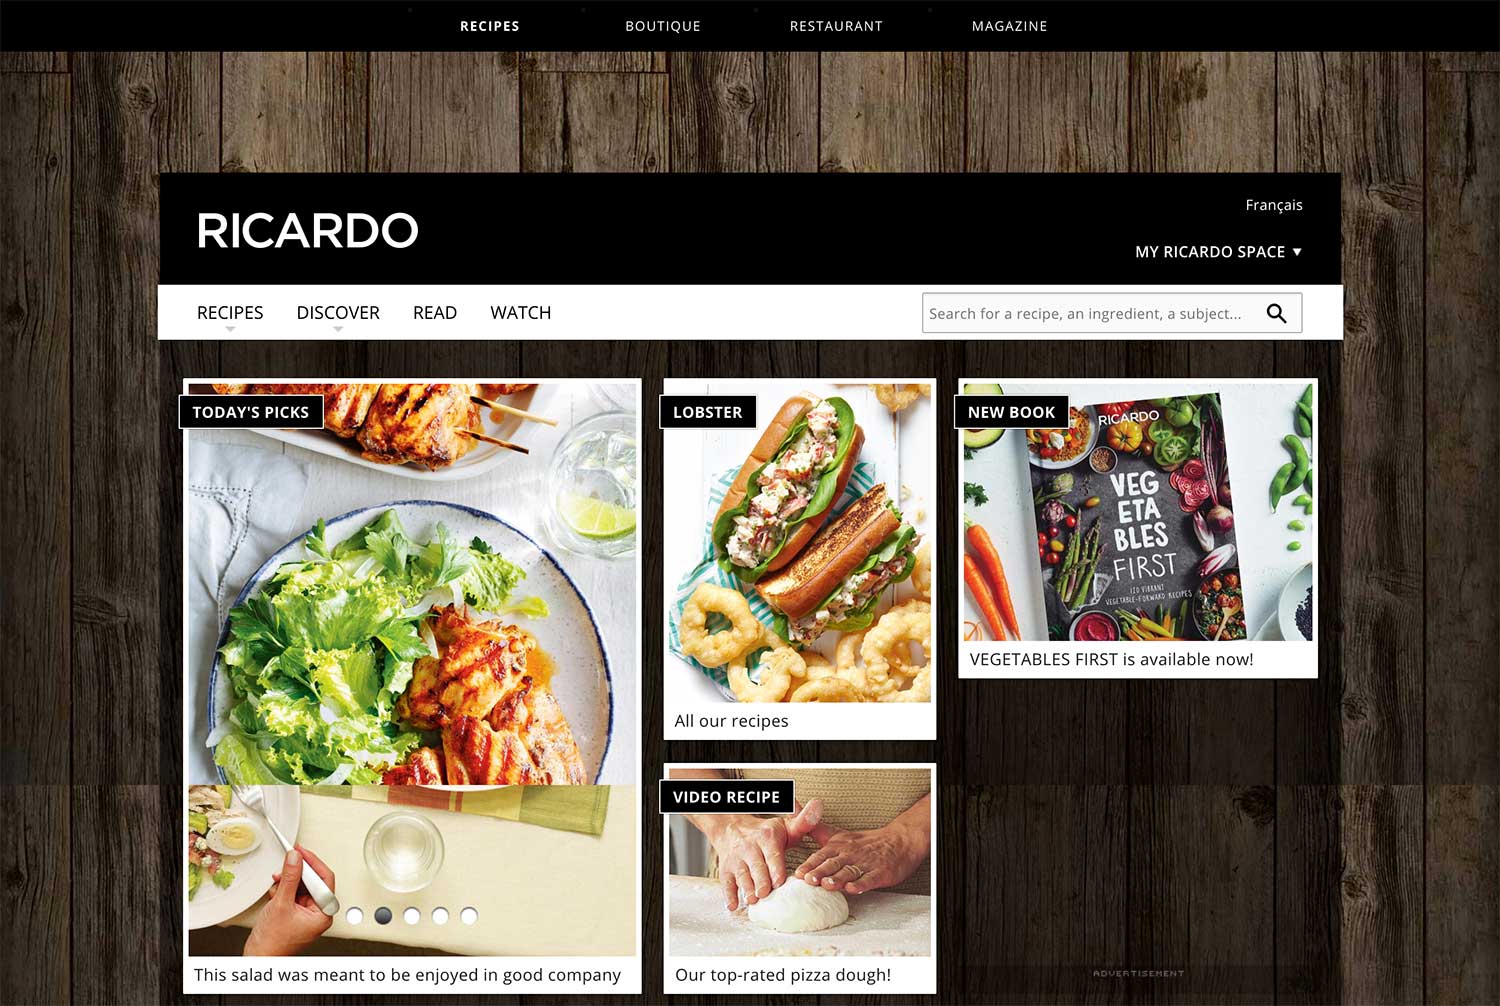 A screenshot of RICARDO’s website featuring recipes, cookbooks, and food videos.